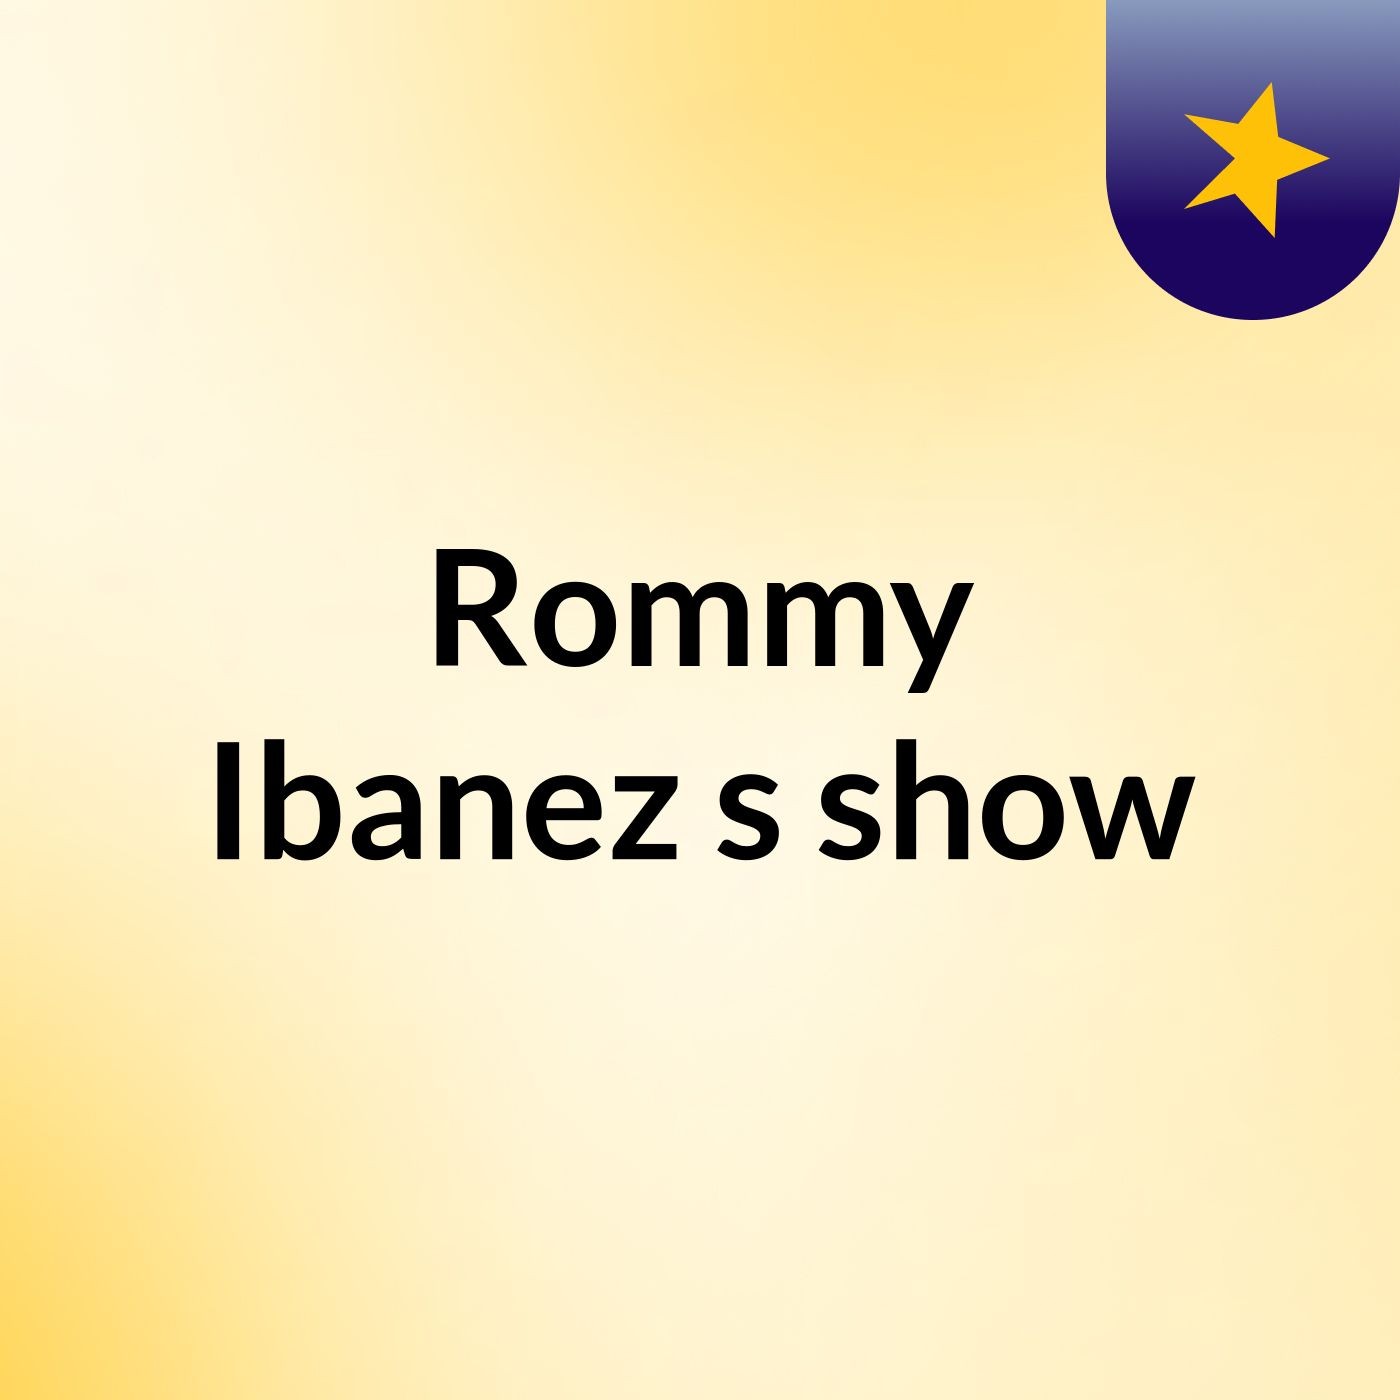 Rommy Ibanez's show